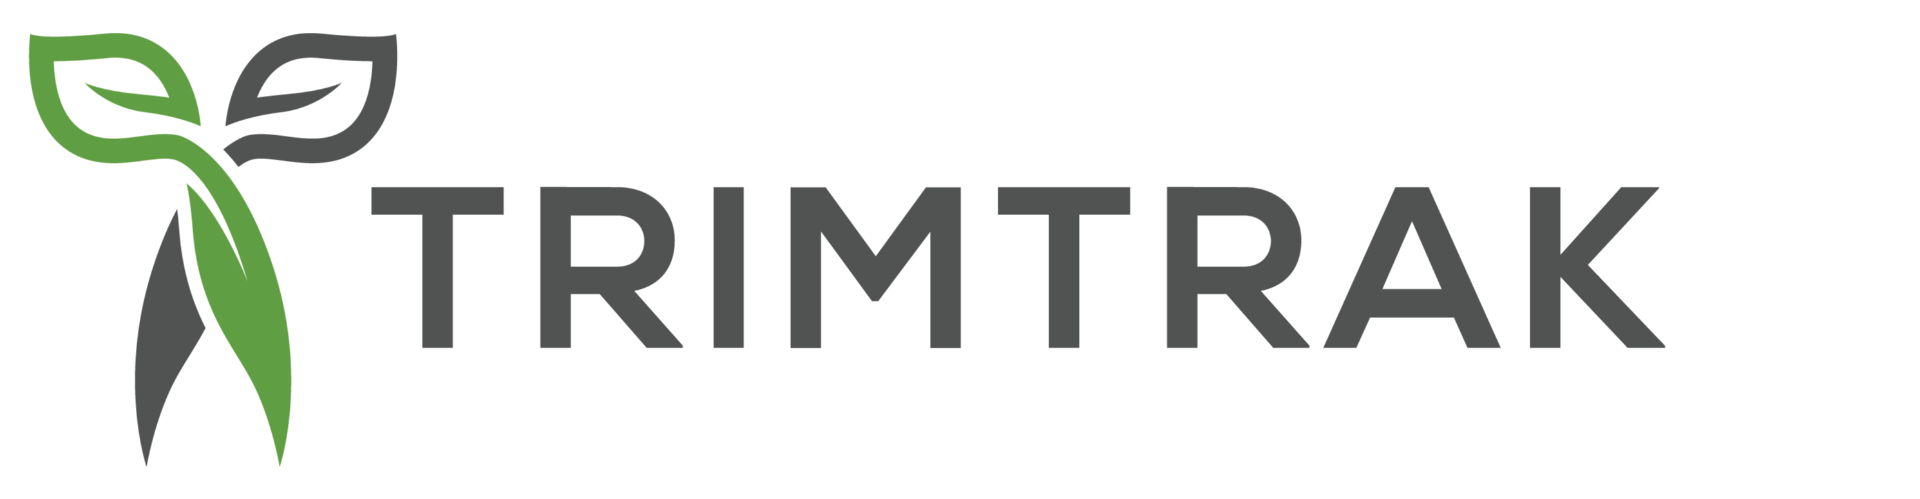 TrimTrakApp Logo